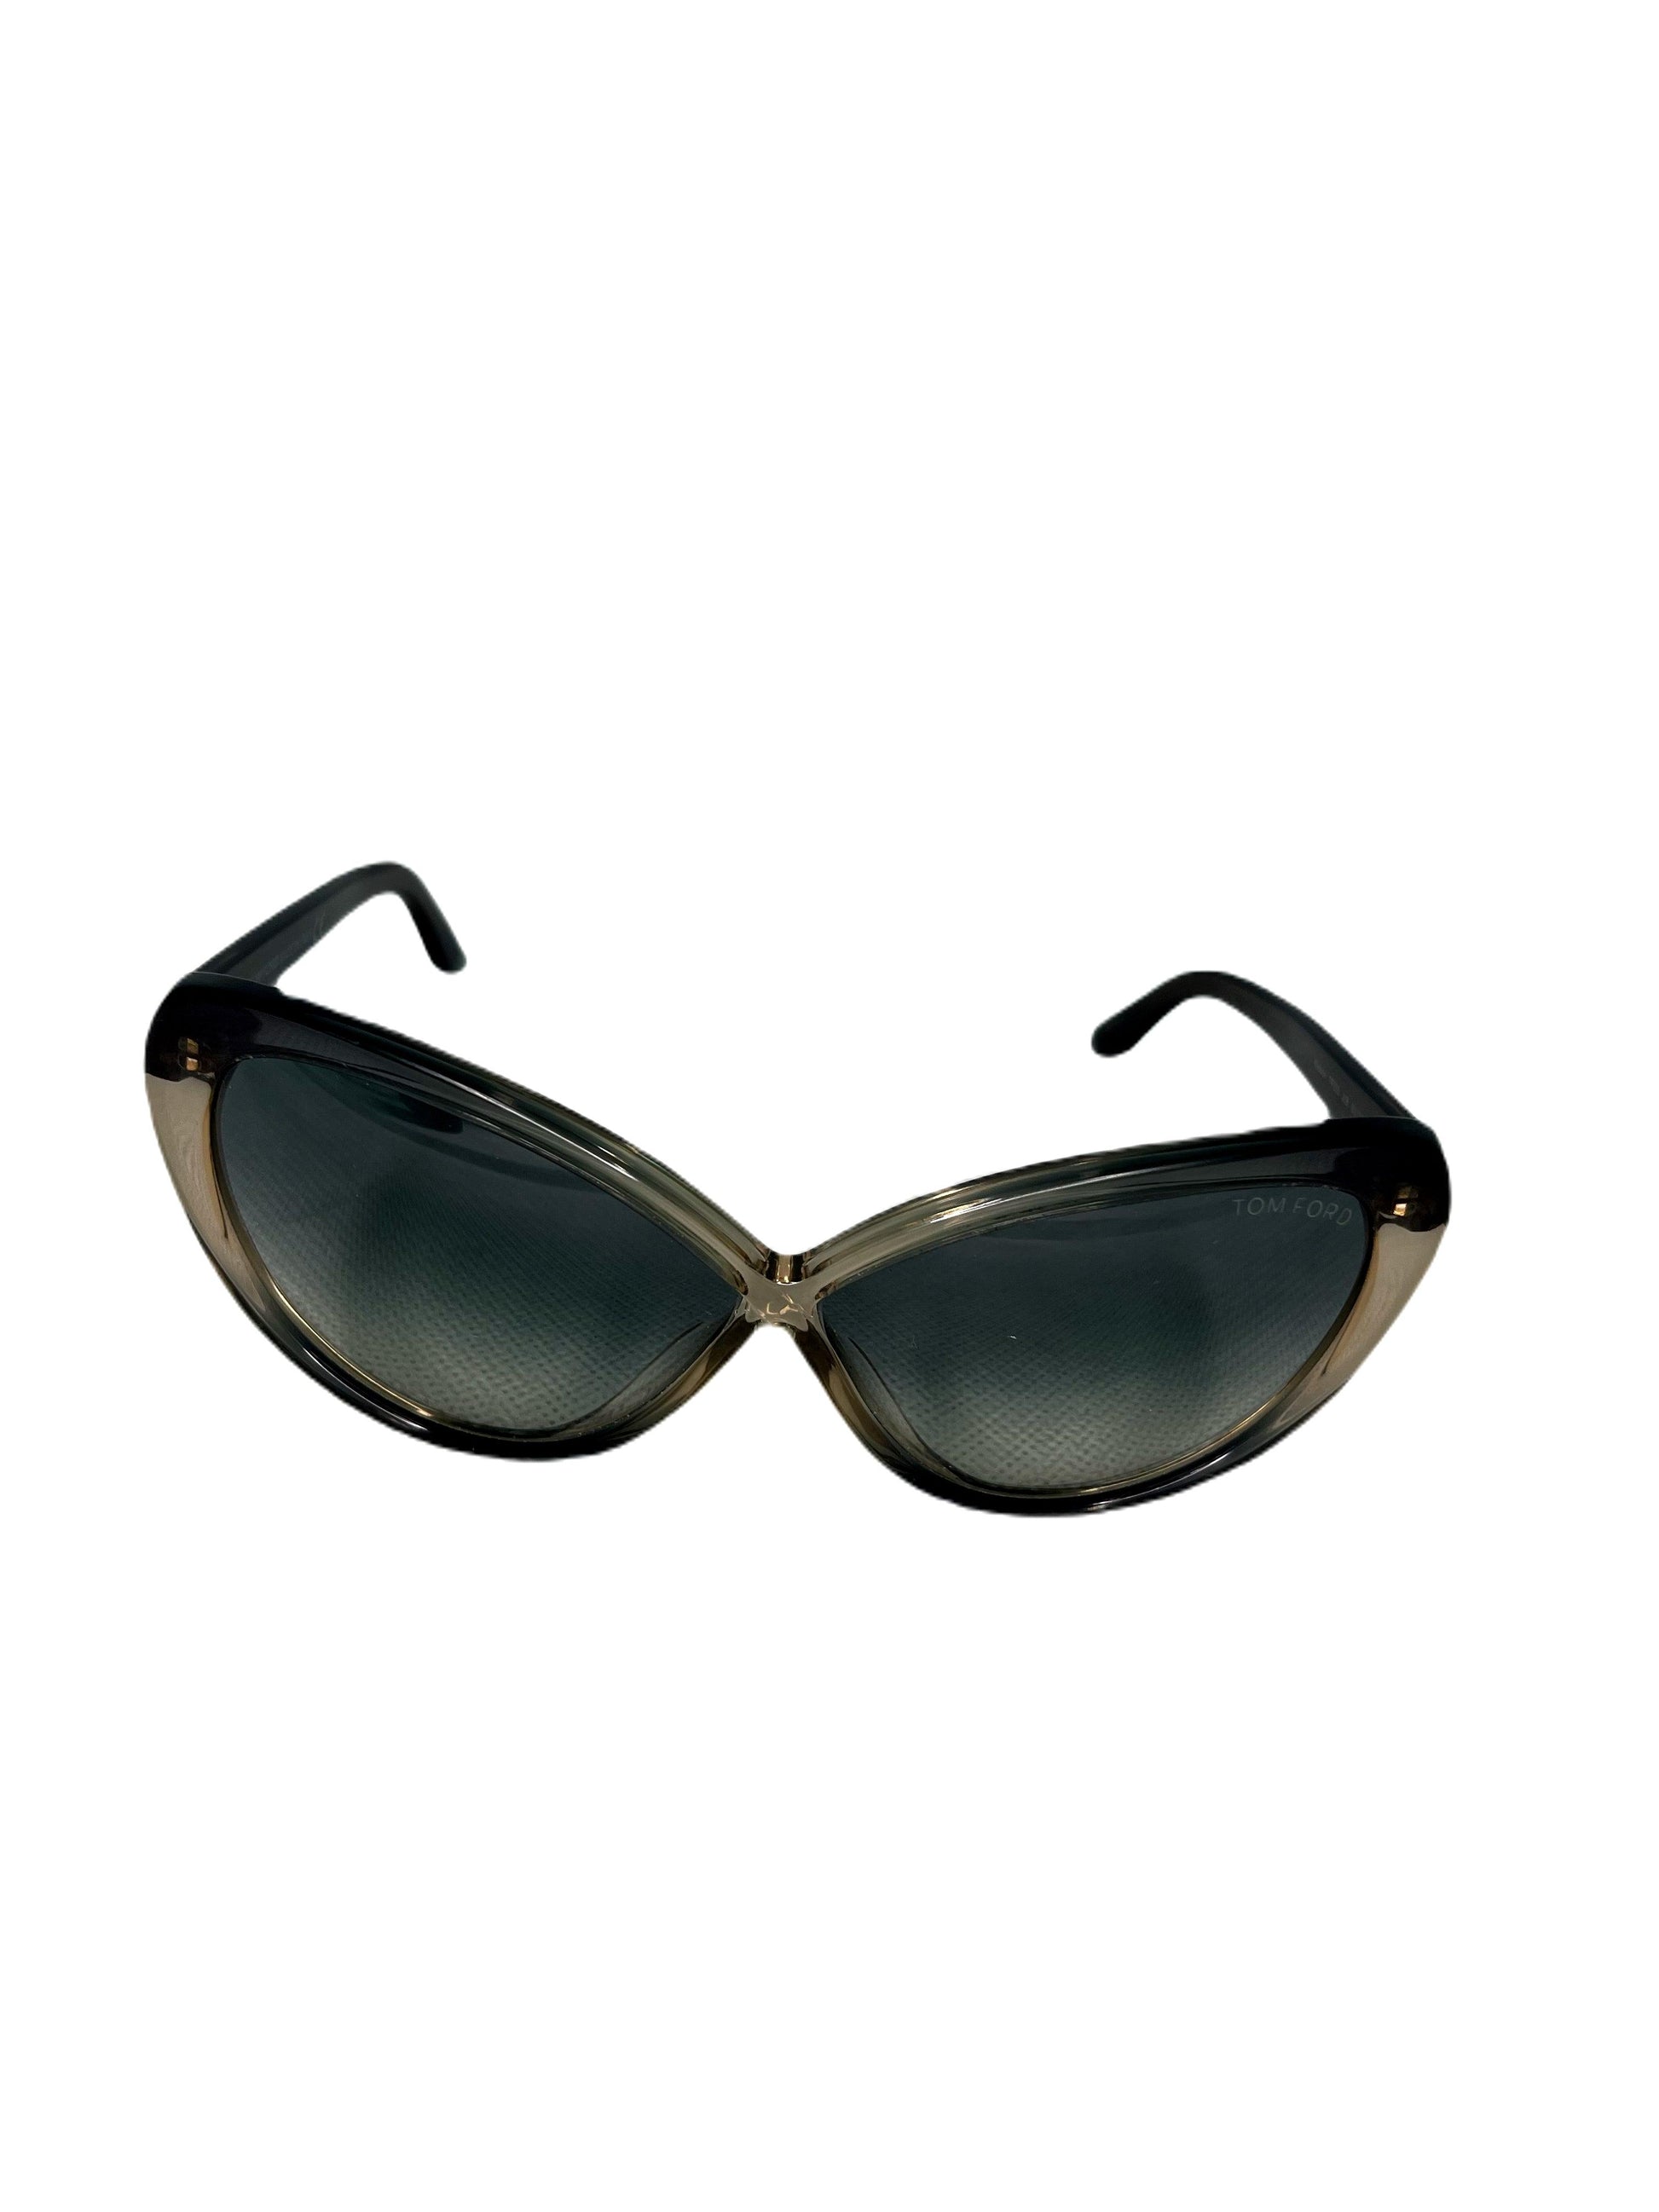 Transparent Cat Eye Sunglasses - Endless